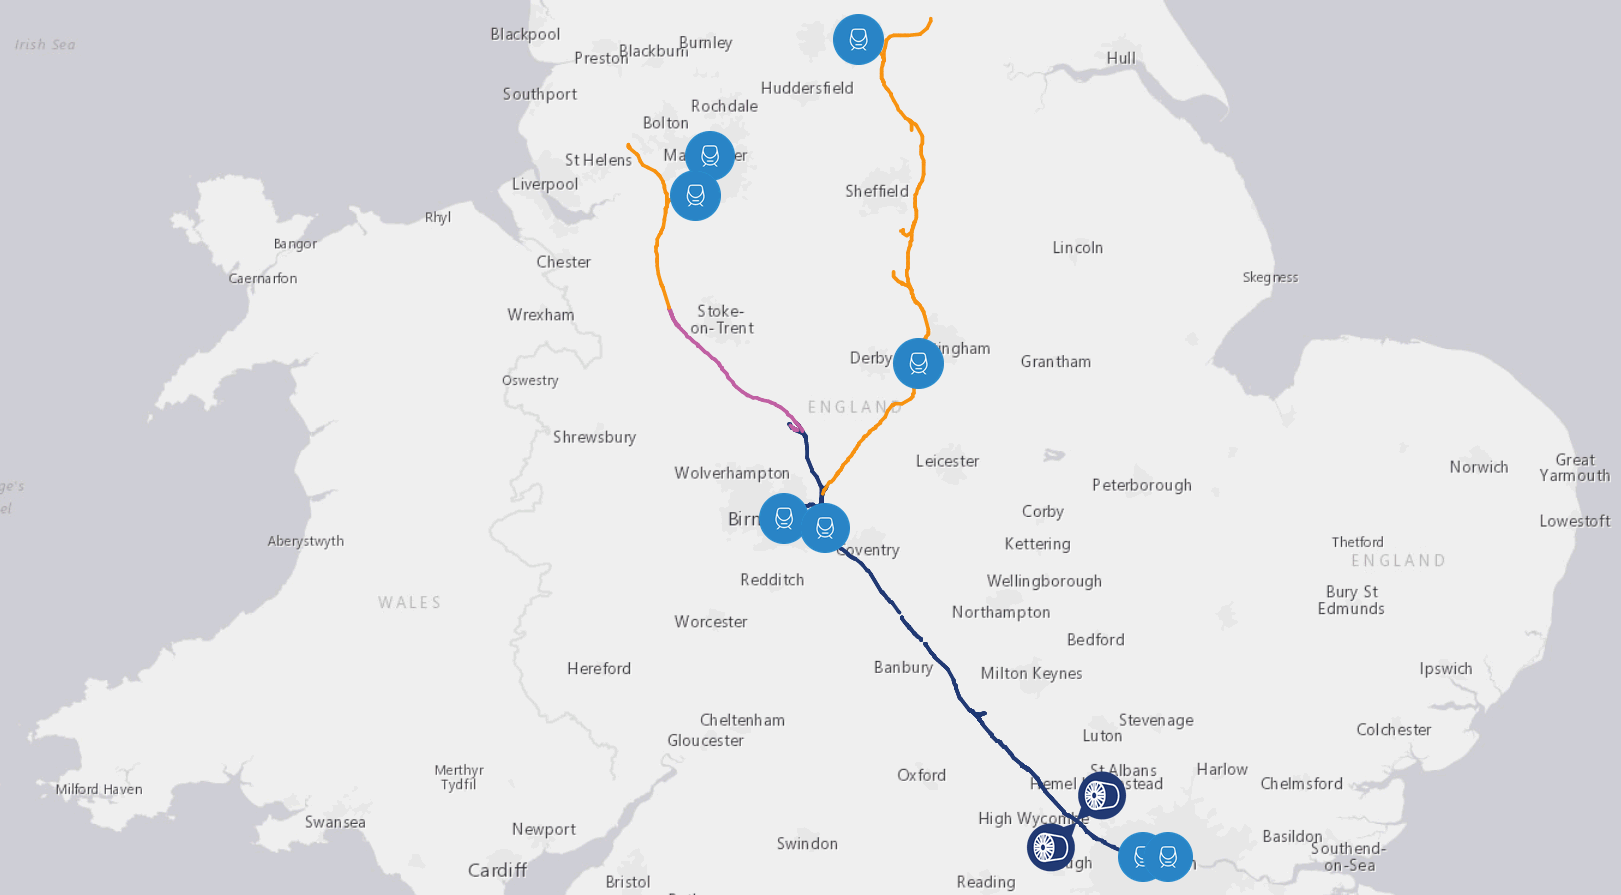 HS2-Trains-UK-Route-Map